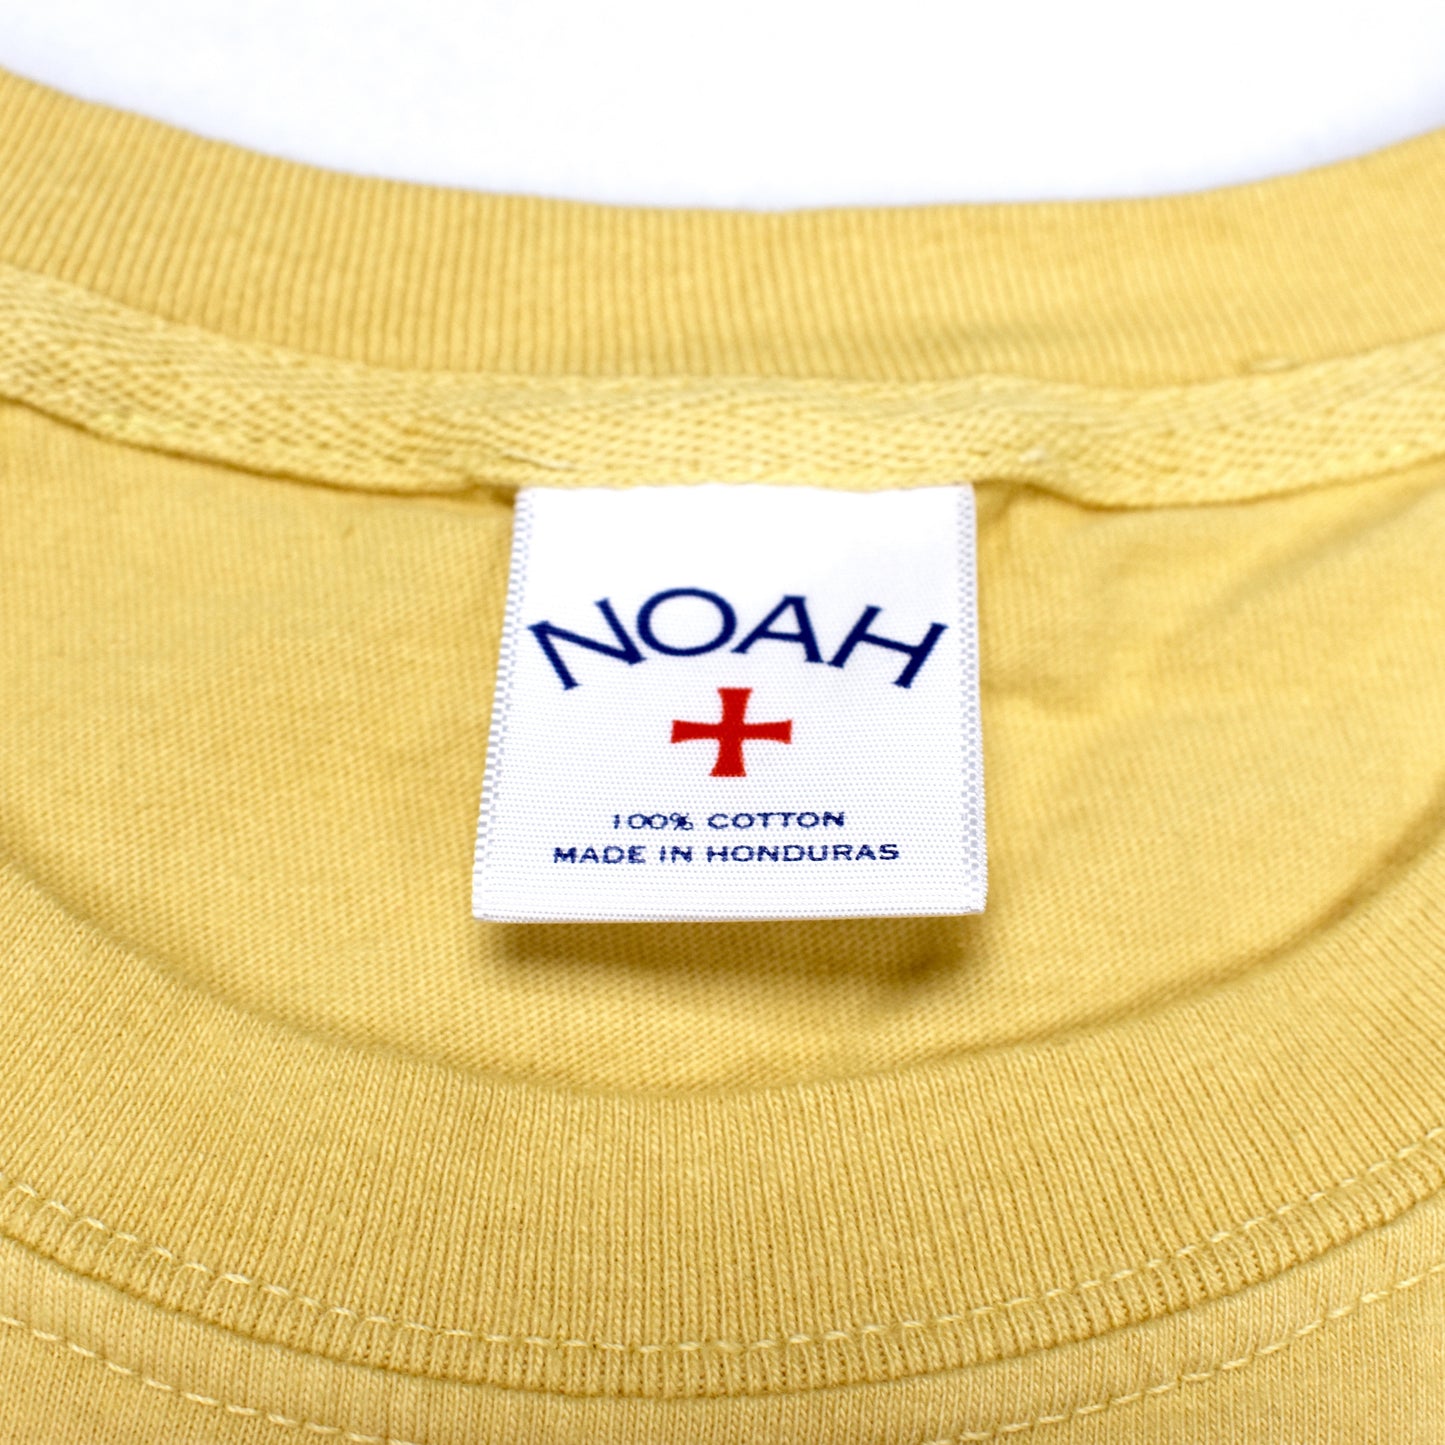 Noah - Beige Smokey the Bear T-Shirt